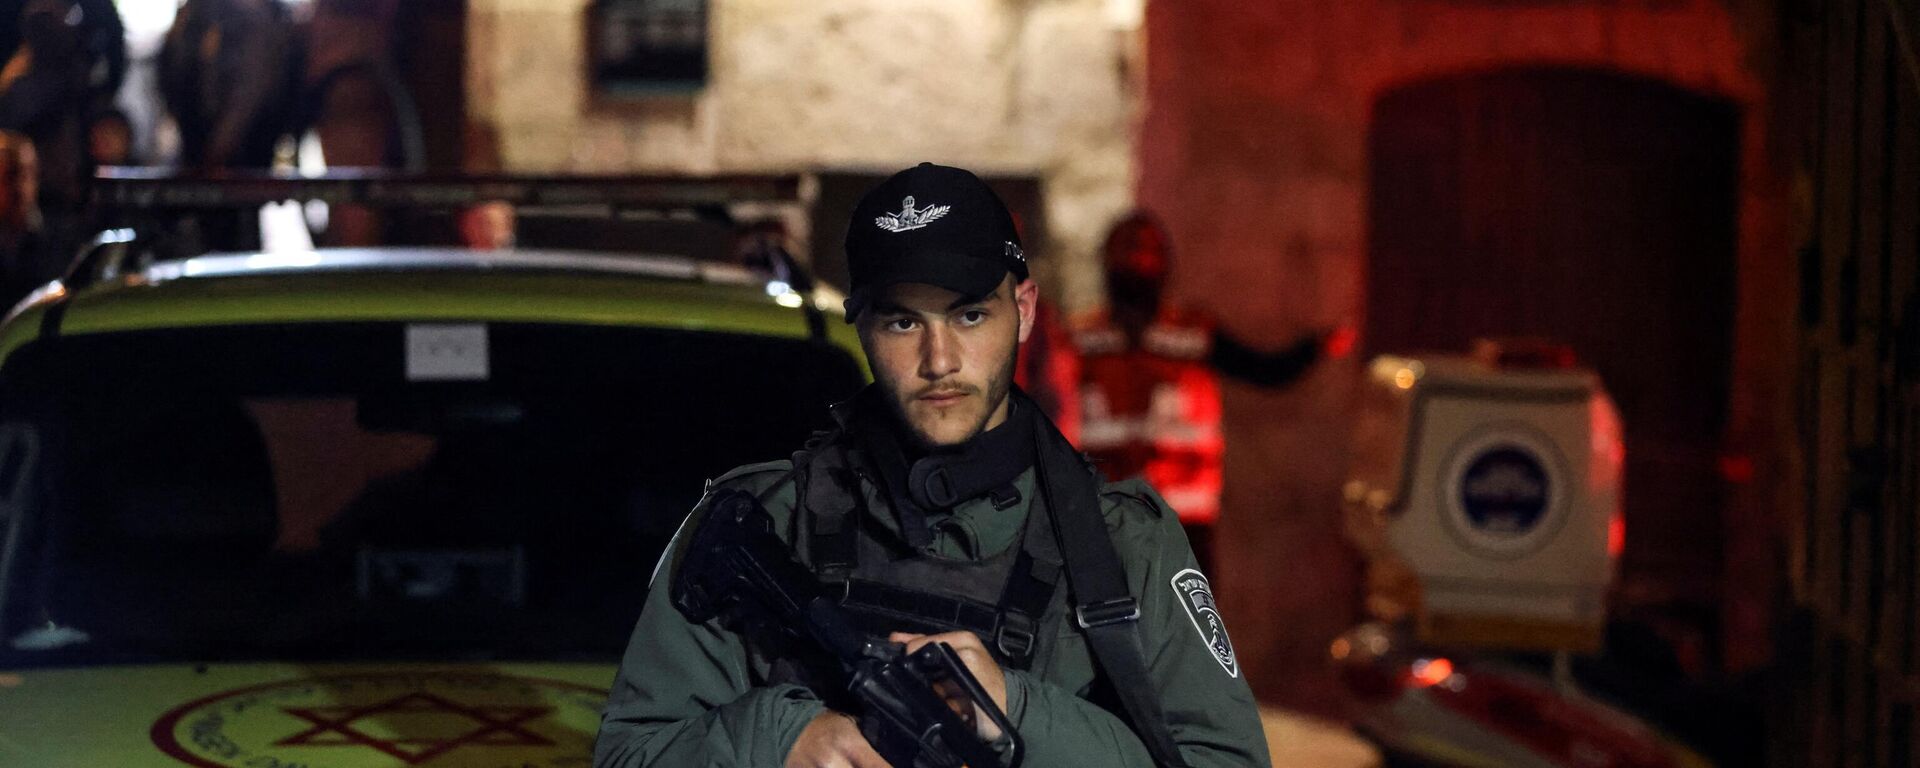 An Israeli Border policeman secure the are following an incident inside Jerusalem's Old city March 7, 2022 REUTERS/Ammar Awad - Sputnik International, 1920, 30.03.2022